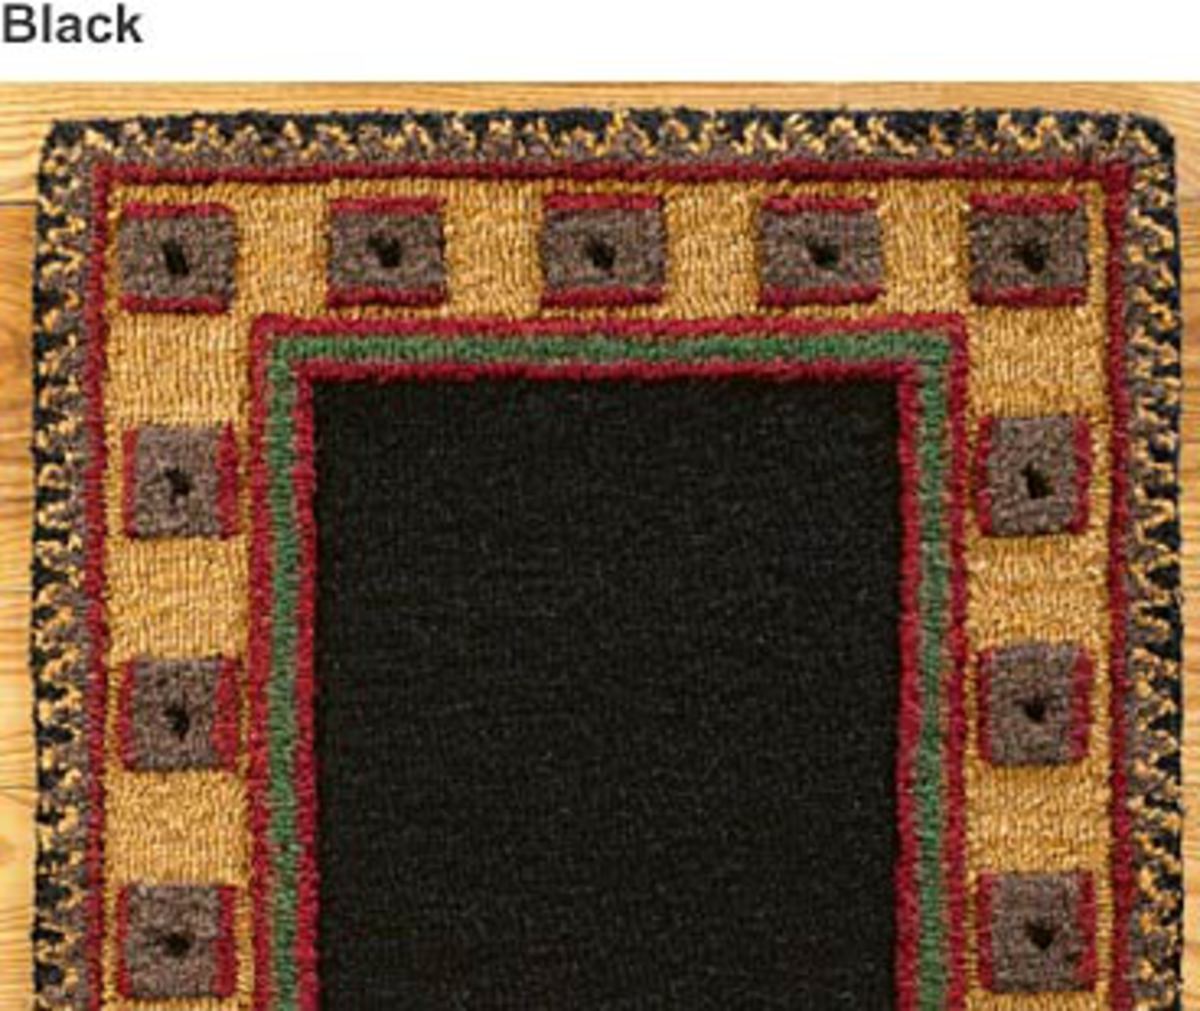 Riverwood Wool Rug, 2' x 3' - Black